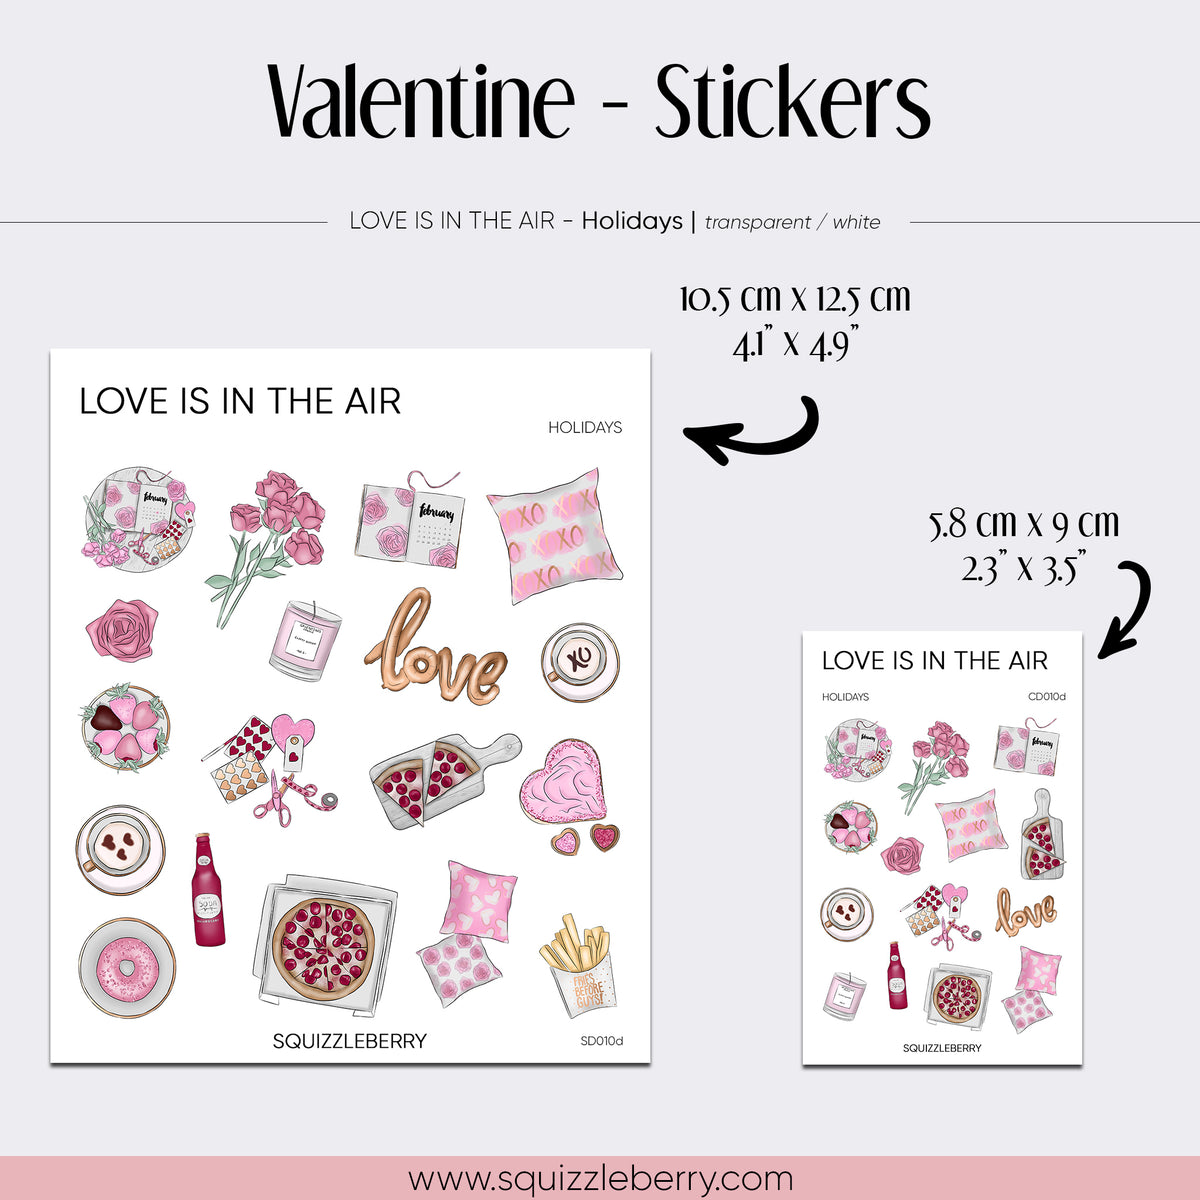 Valentine - Stickers | SquizzleBerry